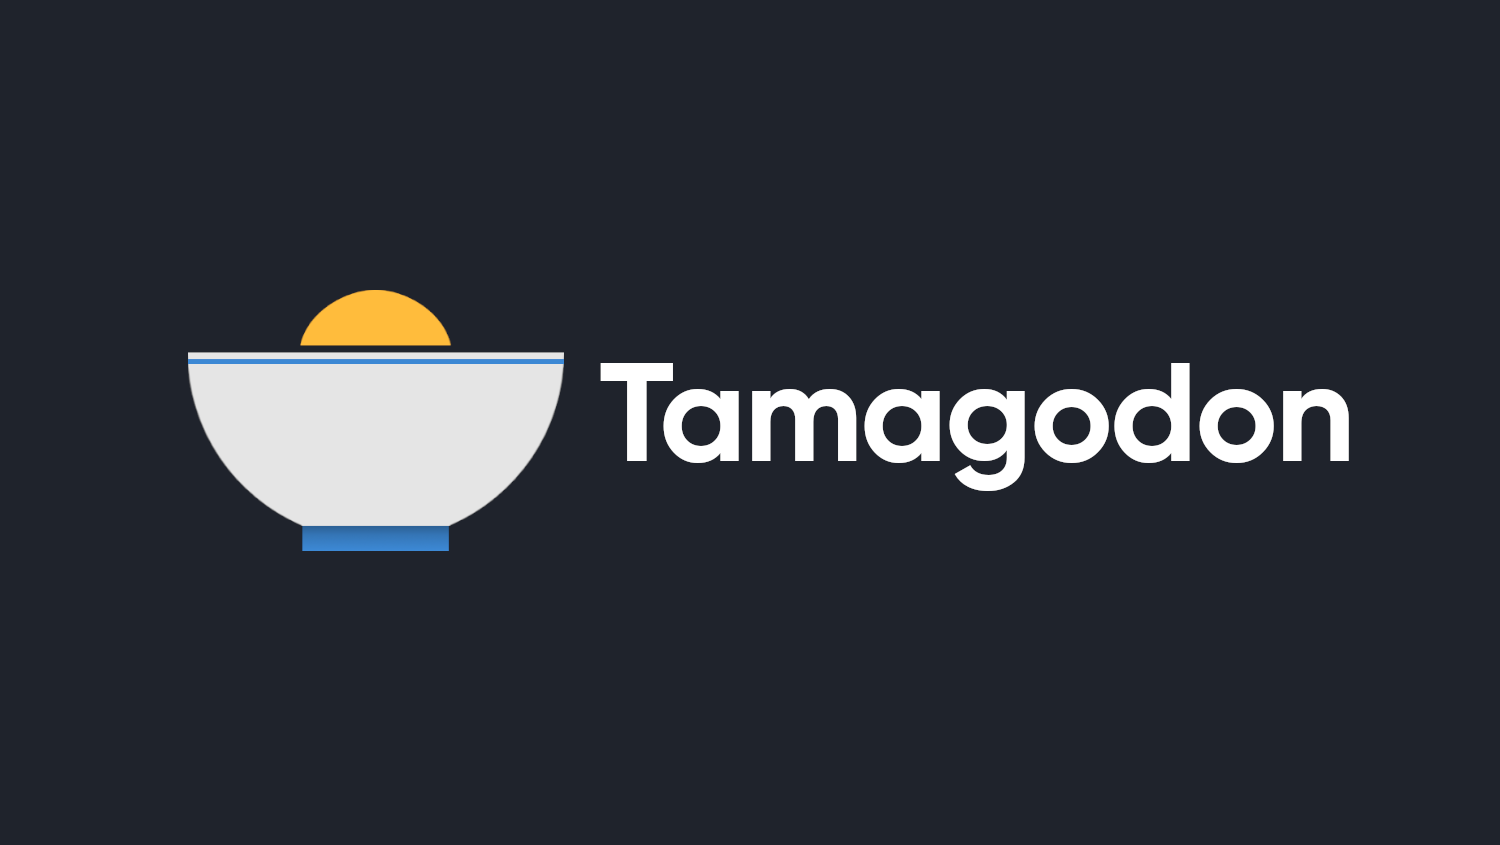 Tamago Gadget